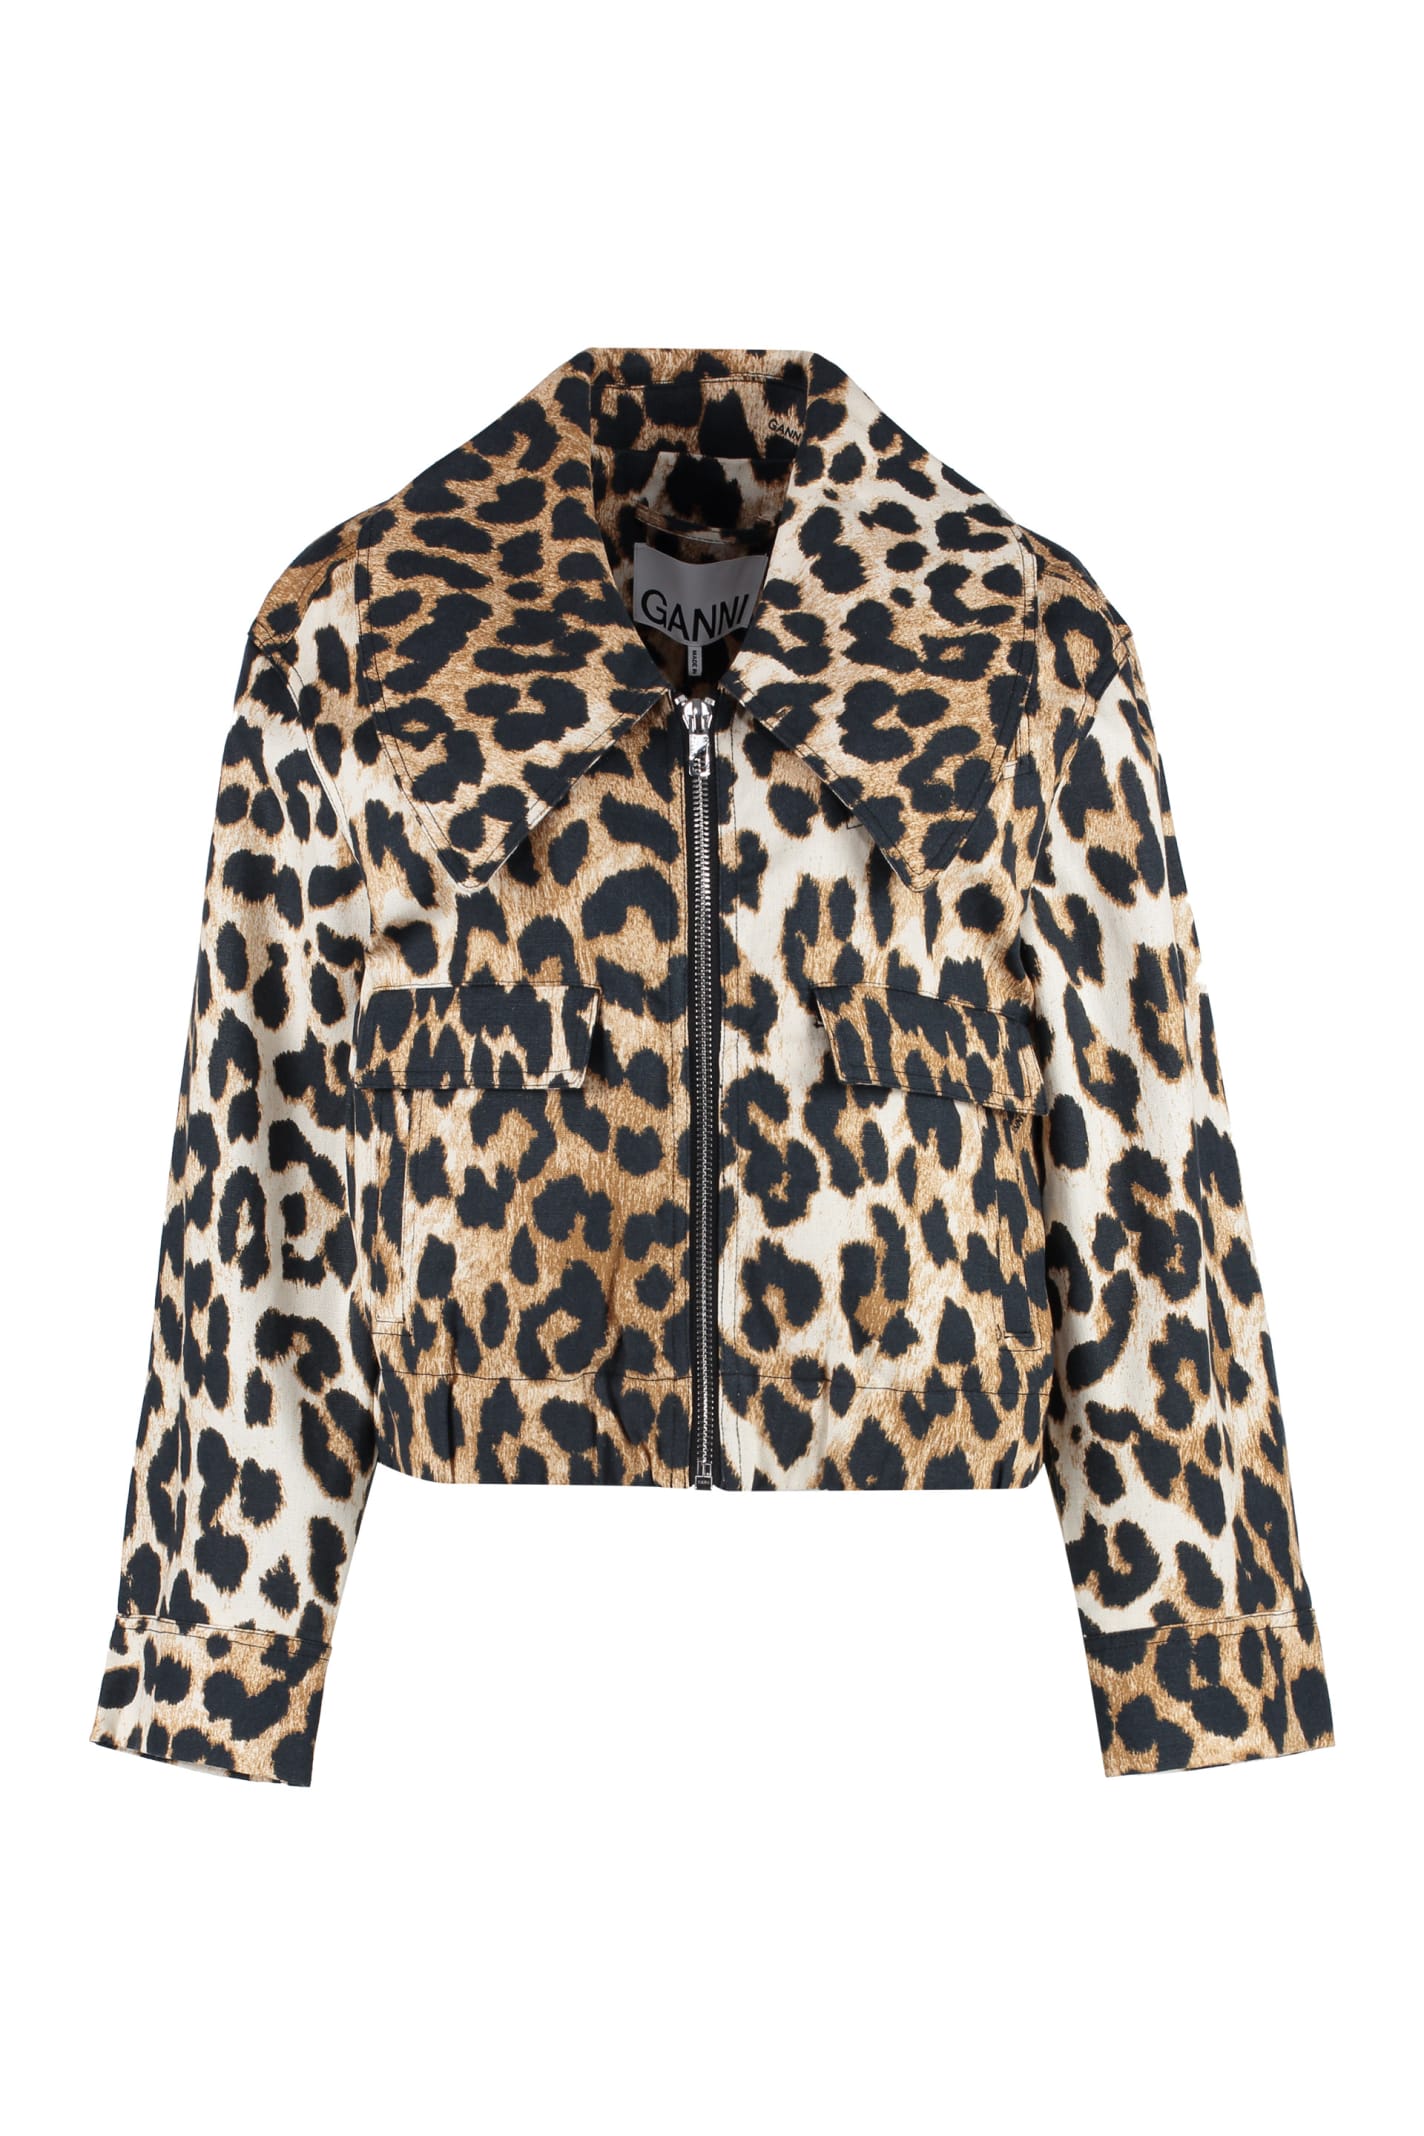 Ganni Leopard Print Short Jacket